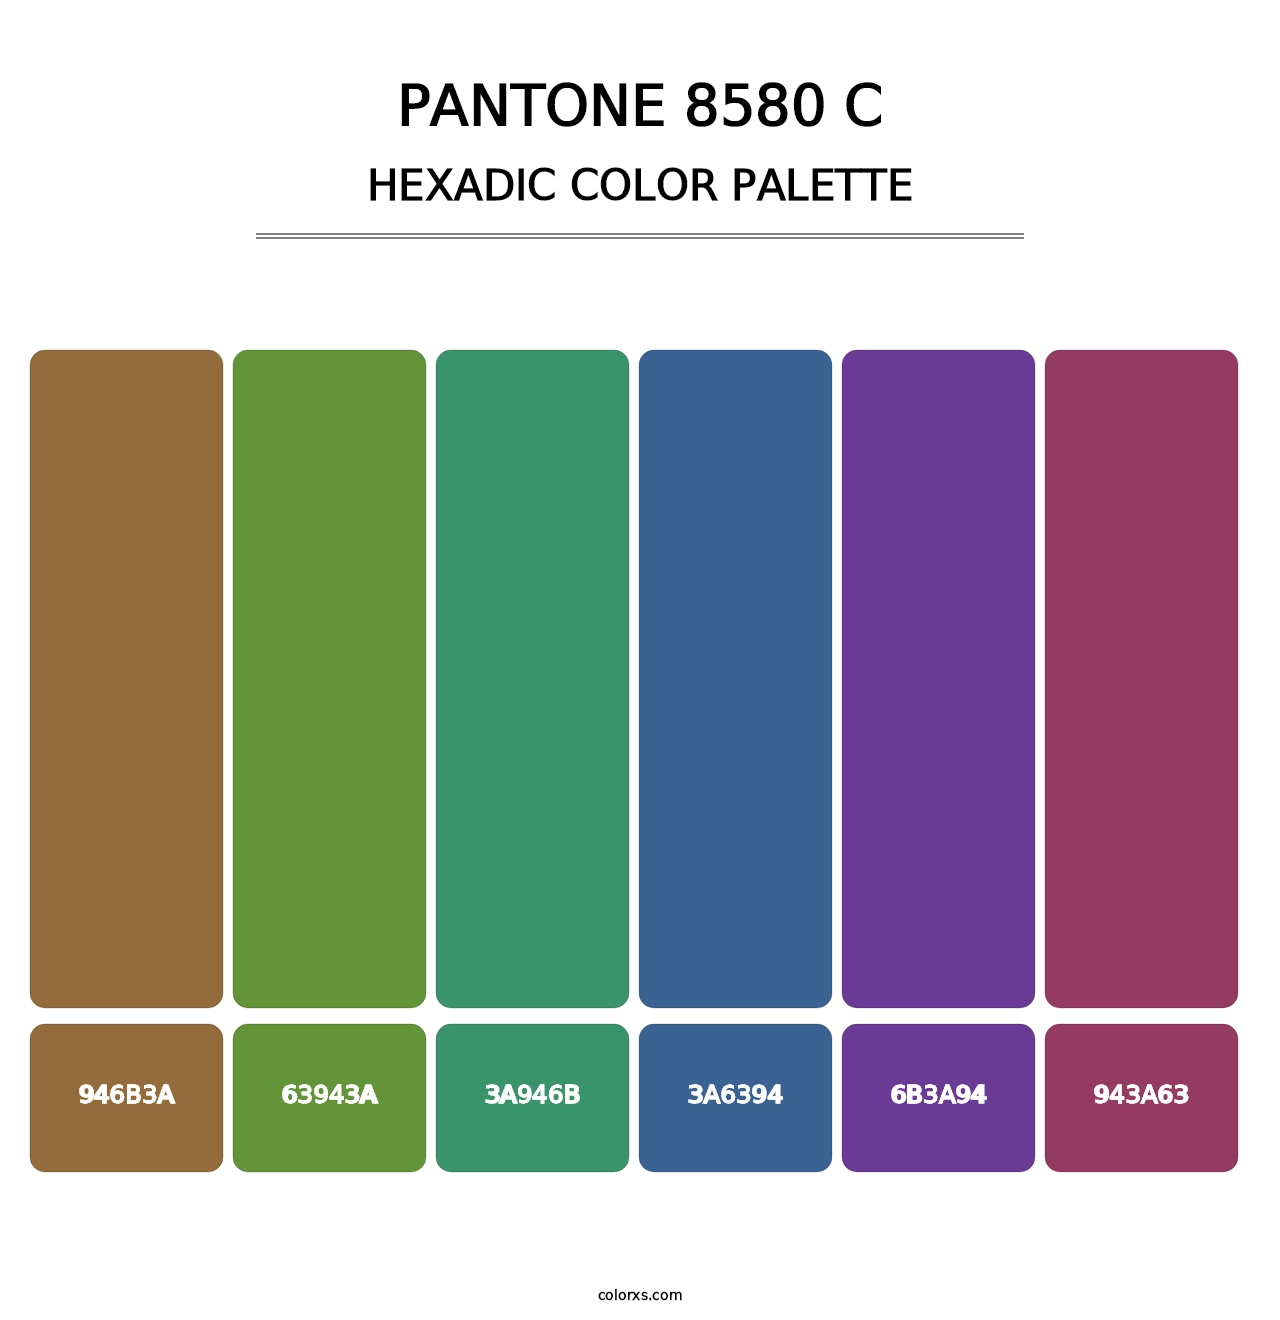 PANTONE 8580 C - Hexadic Color Palette